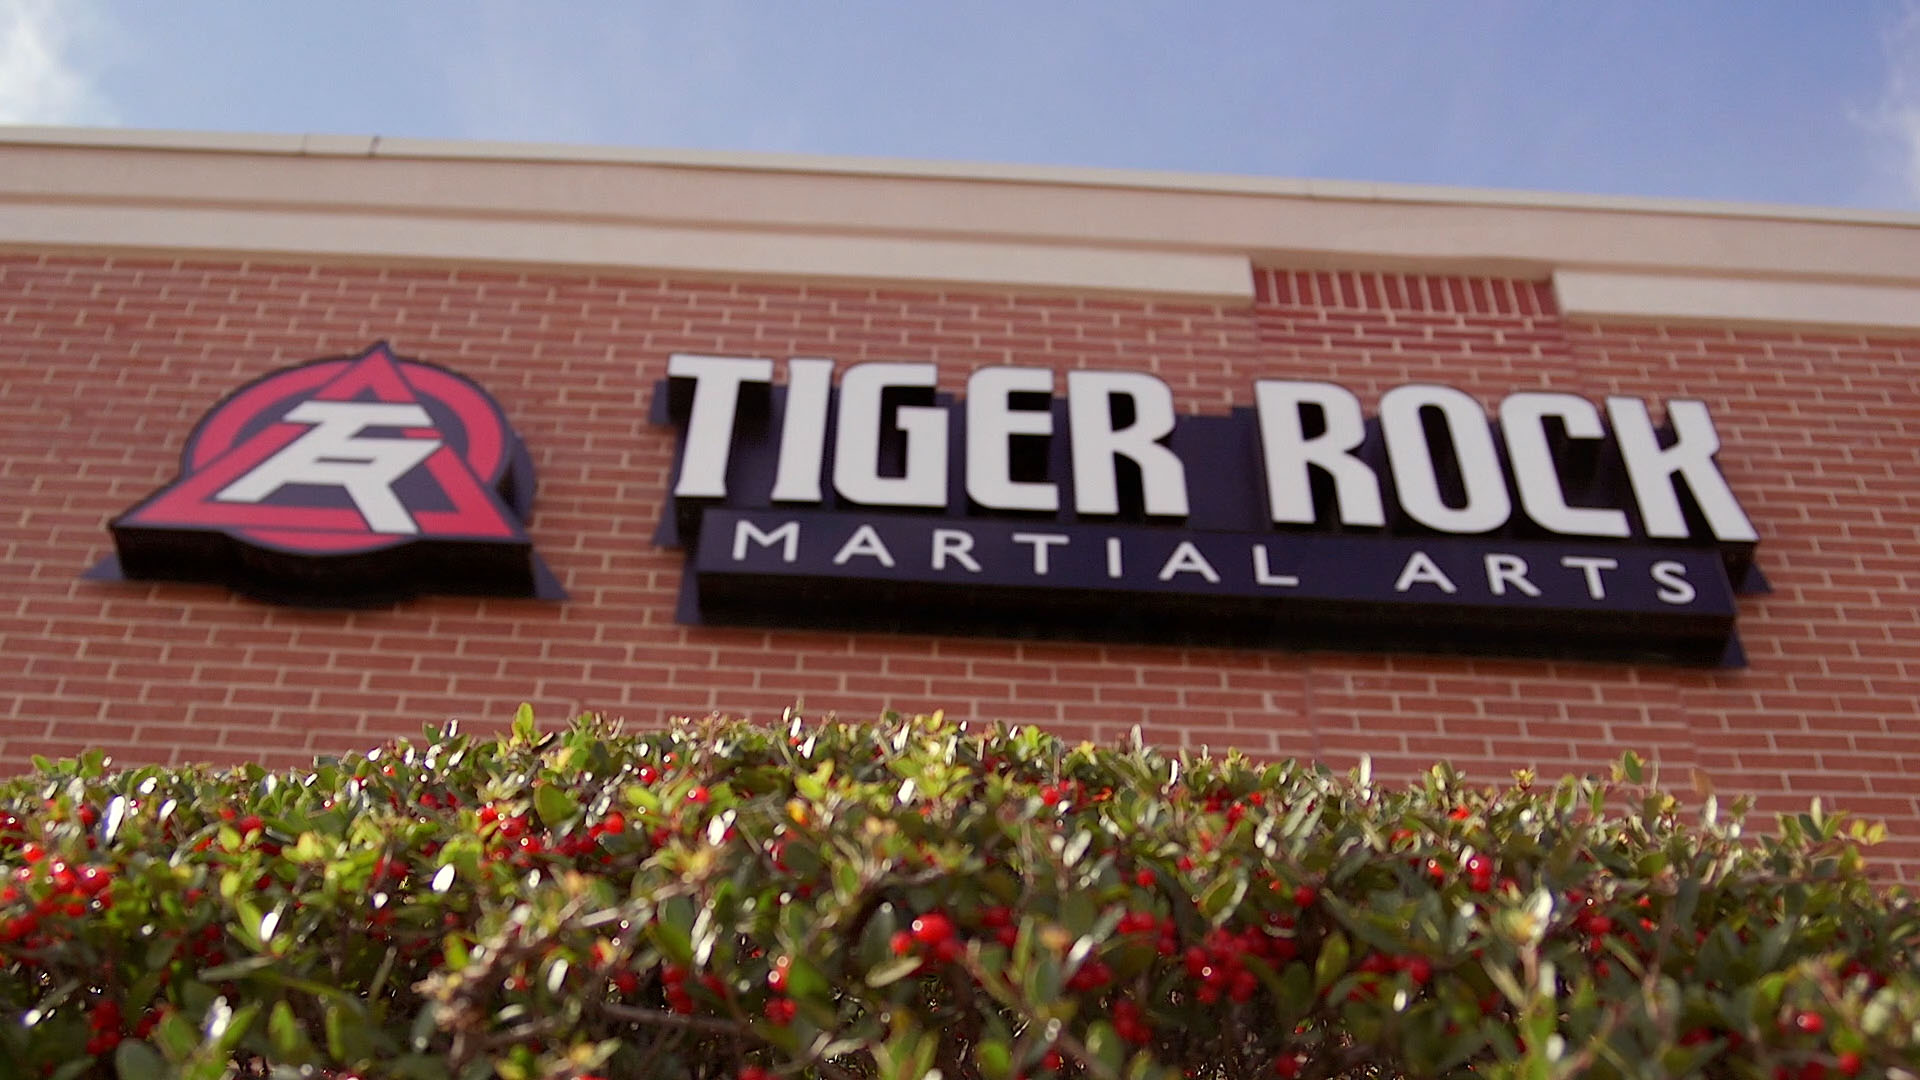 Tiger-Rock Martial Arts of Keller